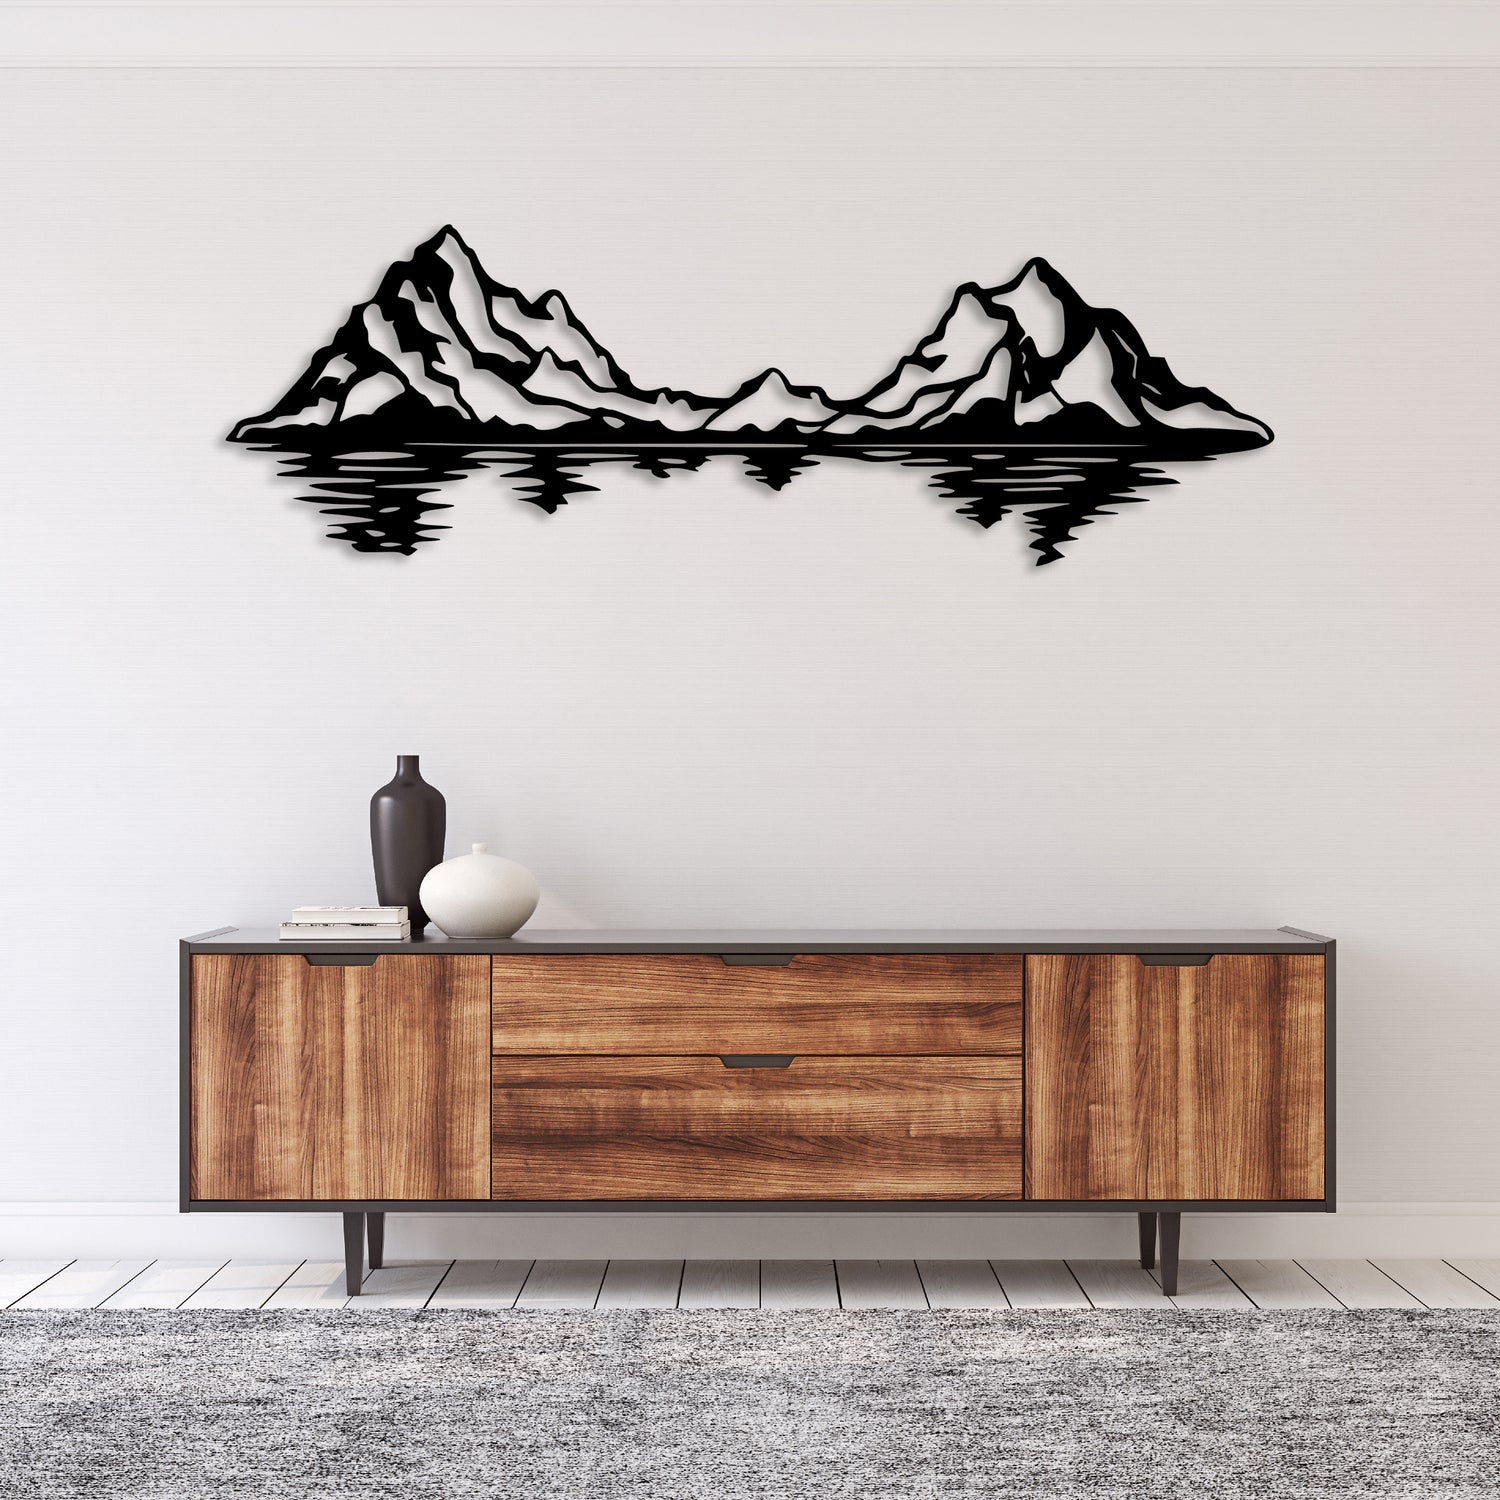 Mountain Range Reflection - Metal Wall Art